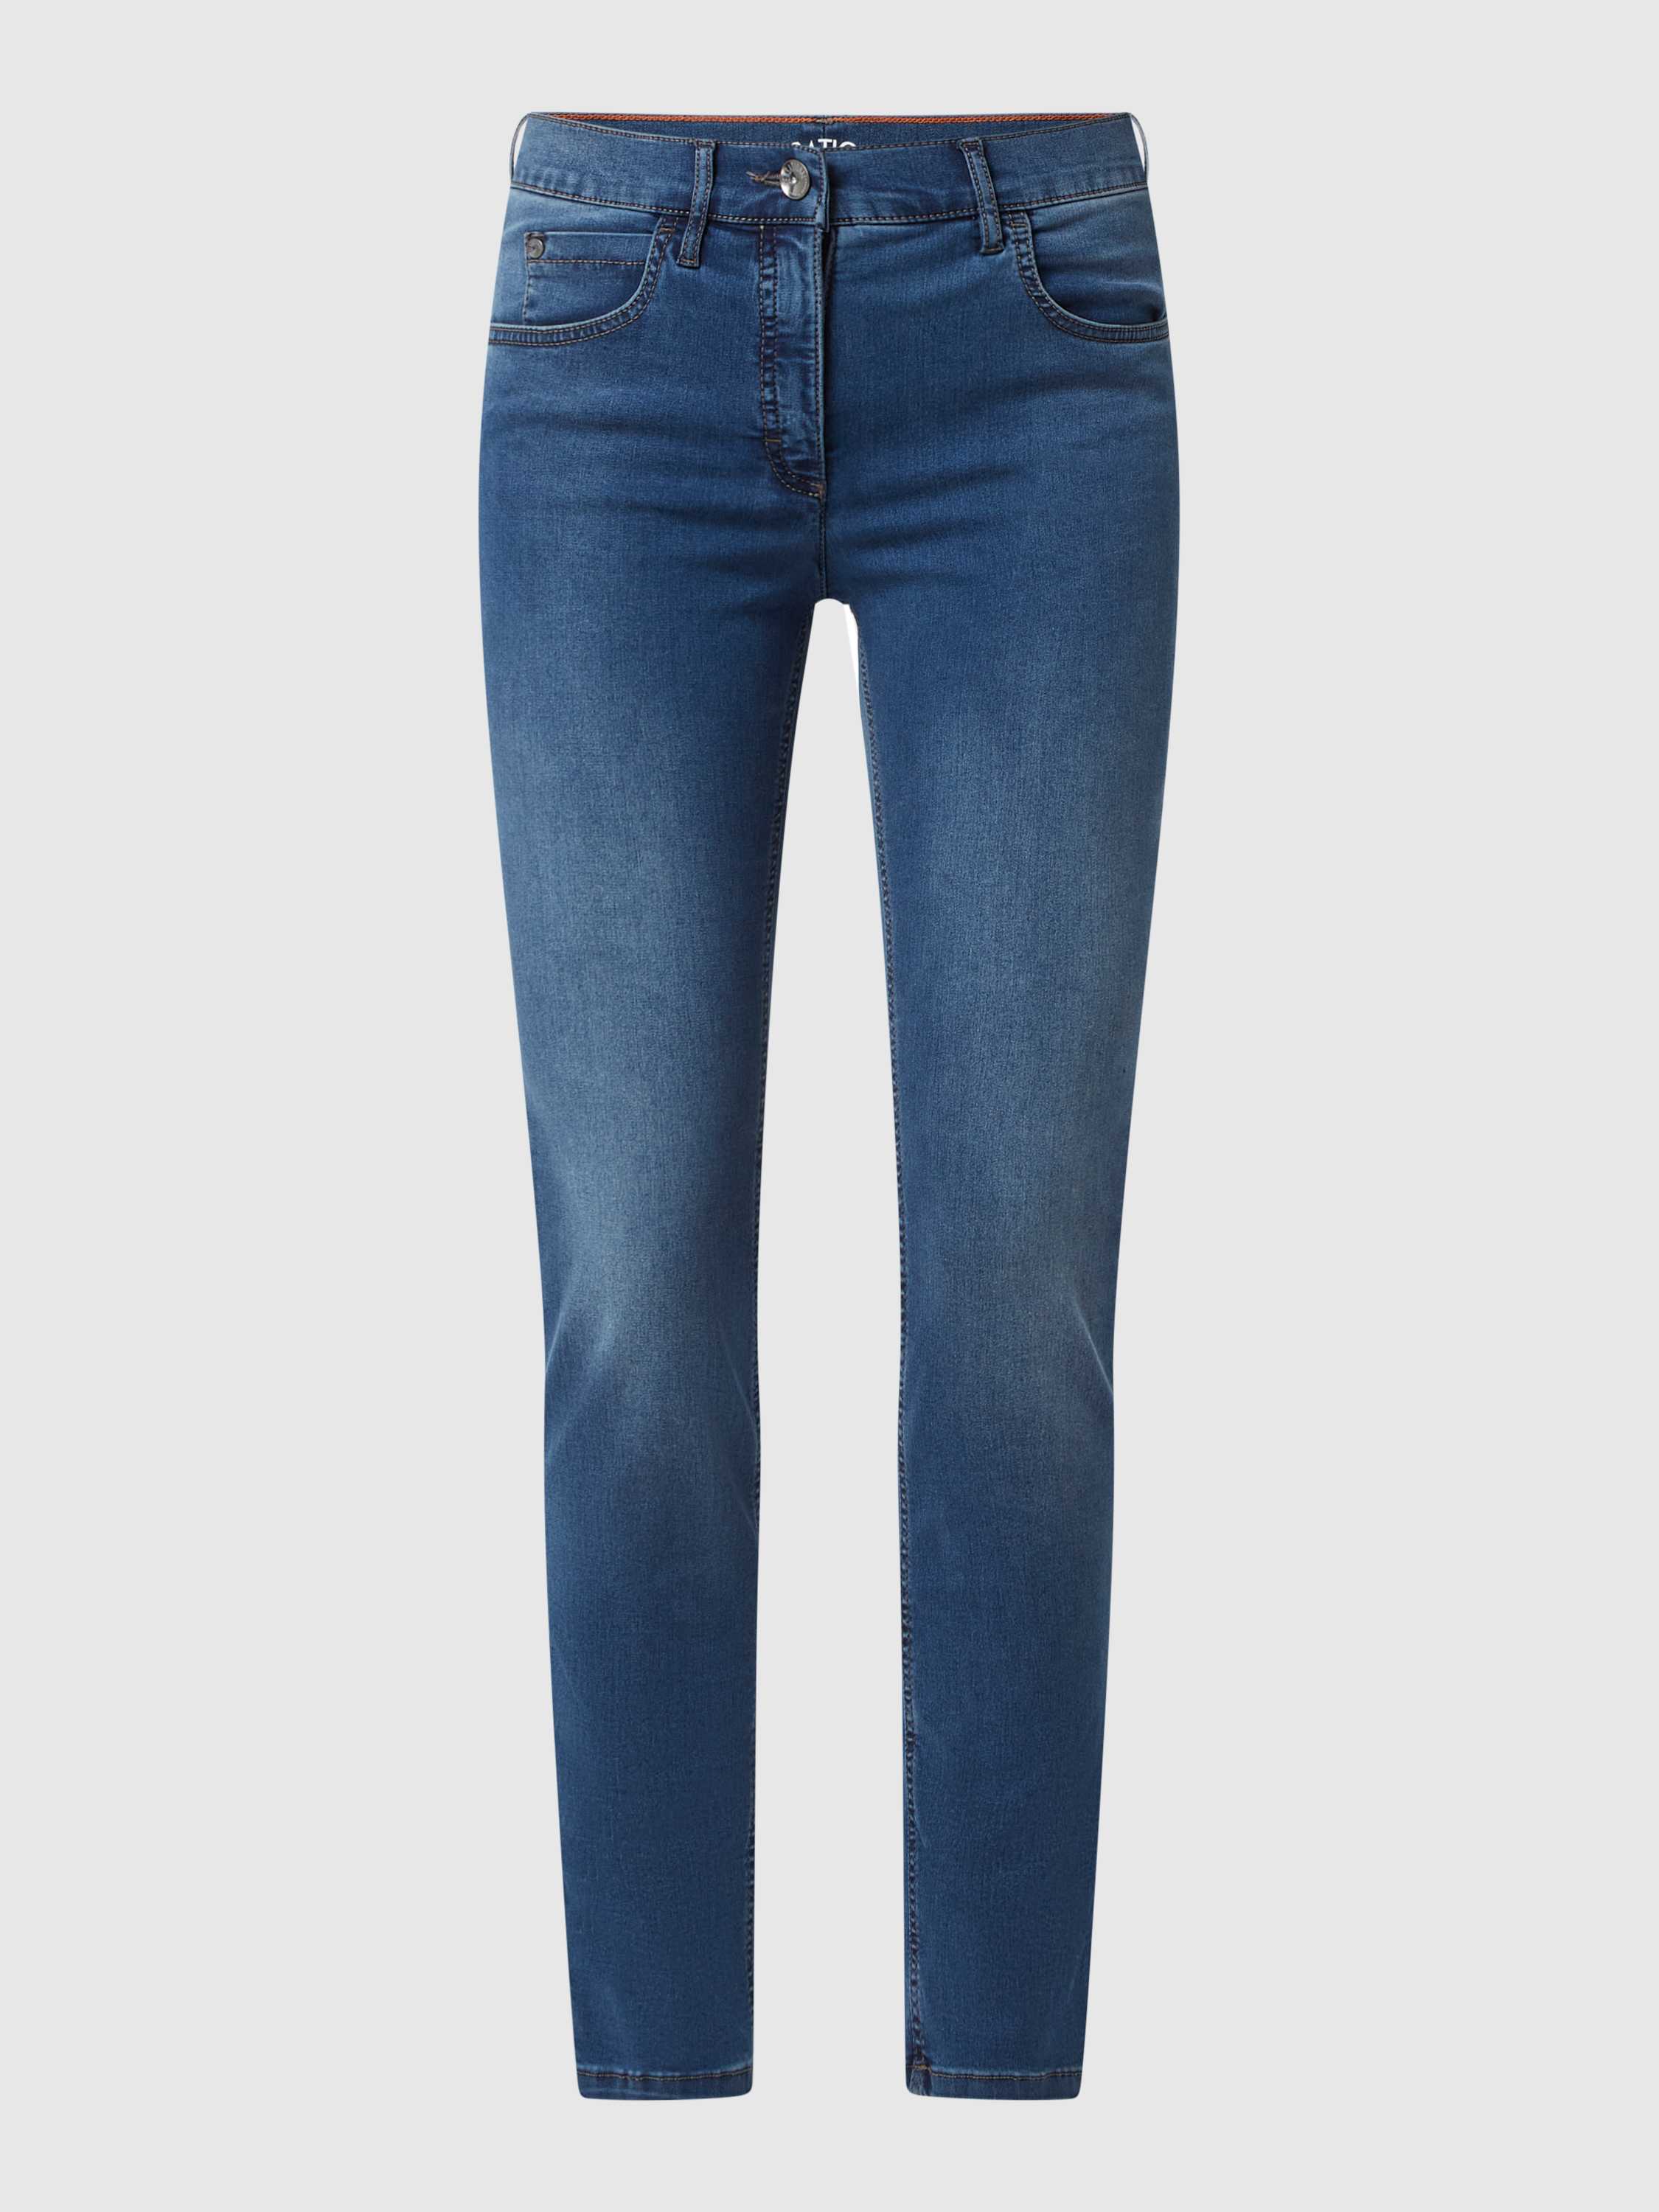 Jeans mit Stretch-Anteil Modell 'Twigy'